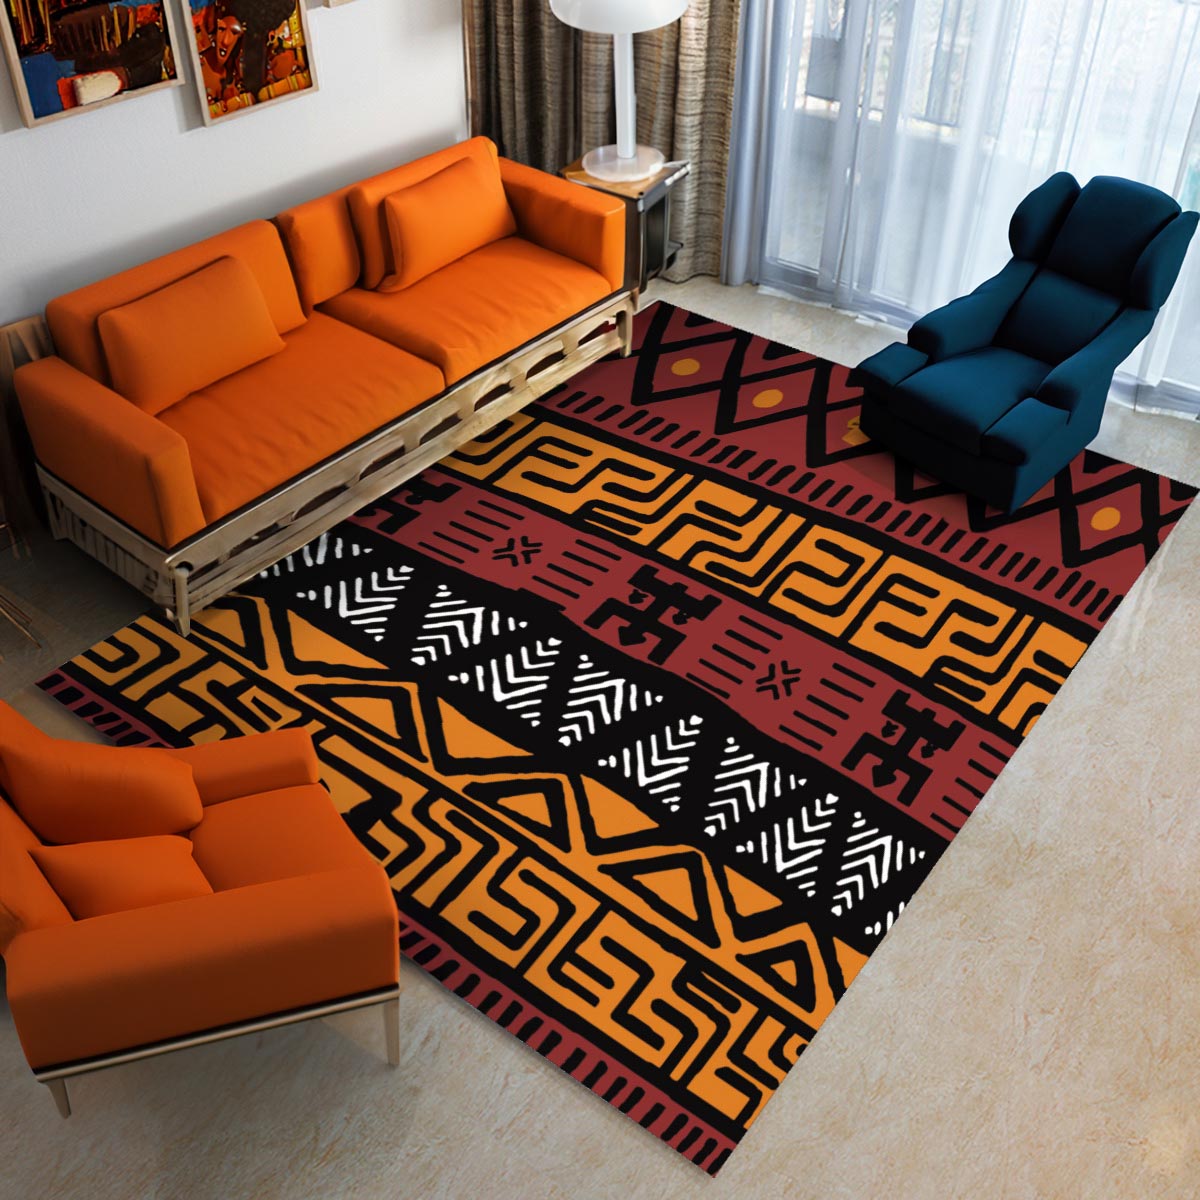 Traditional African Rug - Mudcloth Print Carpet Design